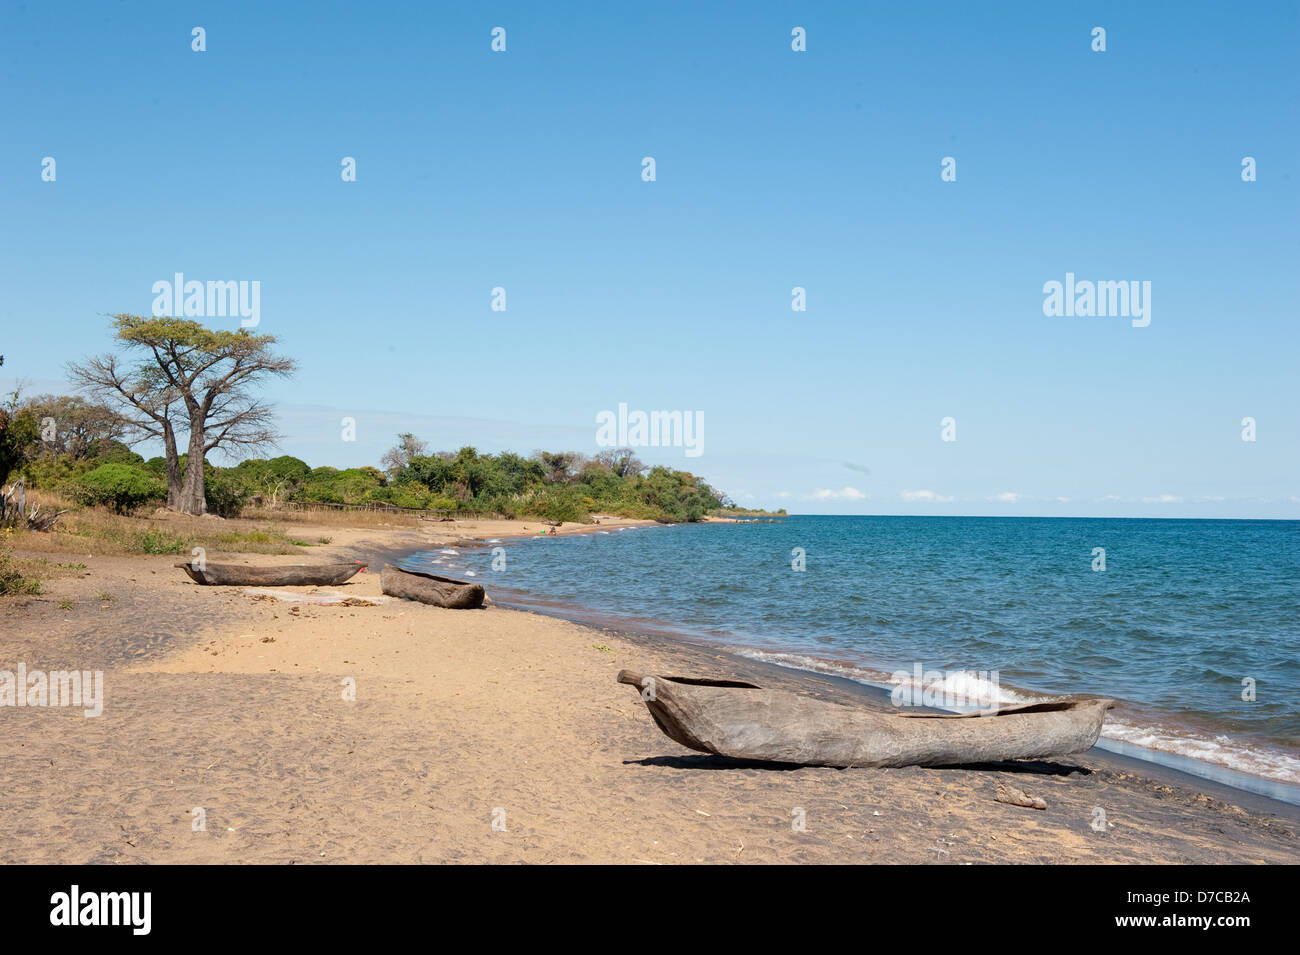 dugout canoes lying on a fishing beach, lake Niassa, Mozambique Stock Photo